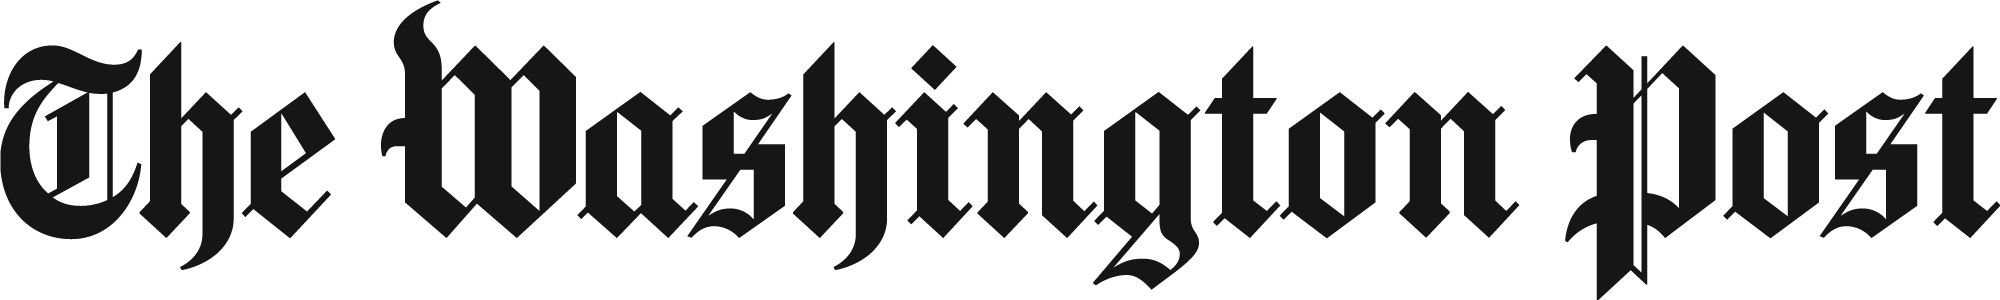 Washington Post Logo png title=